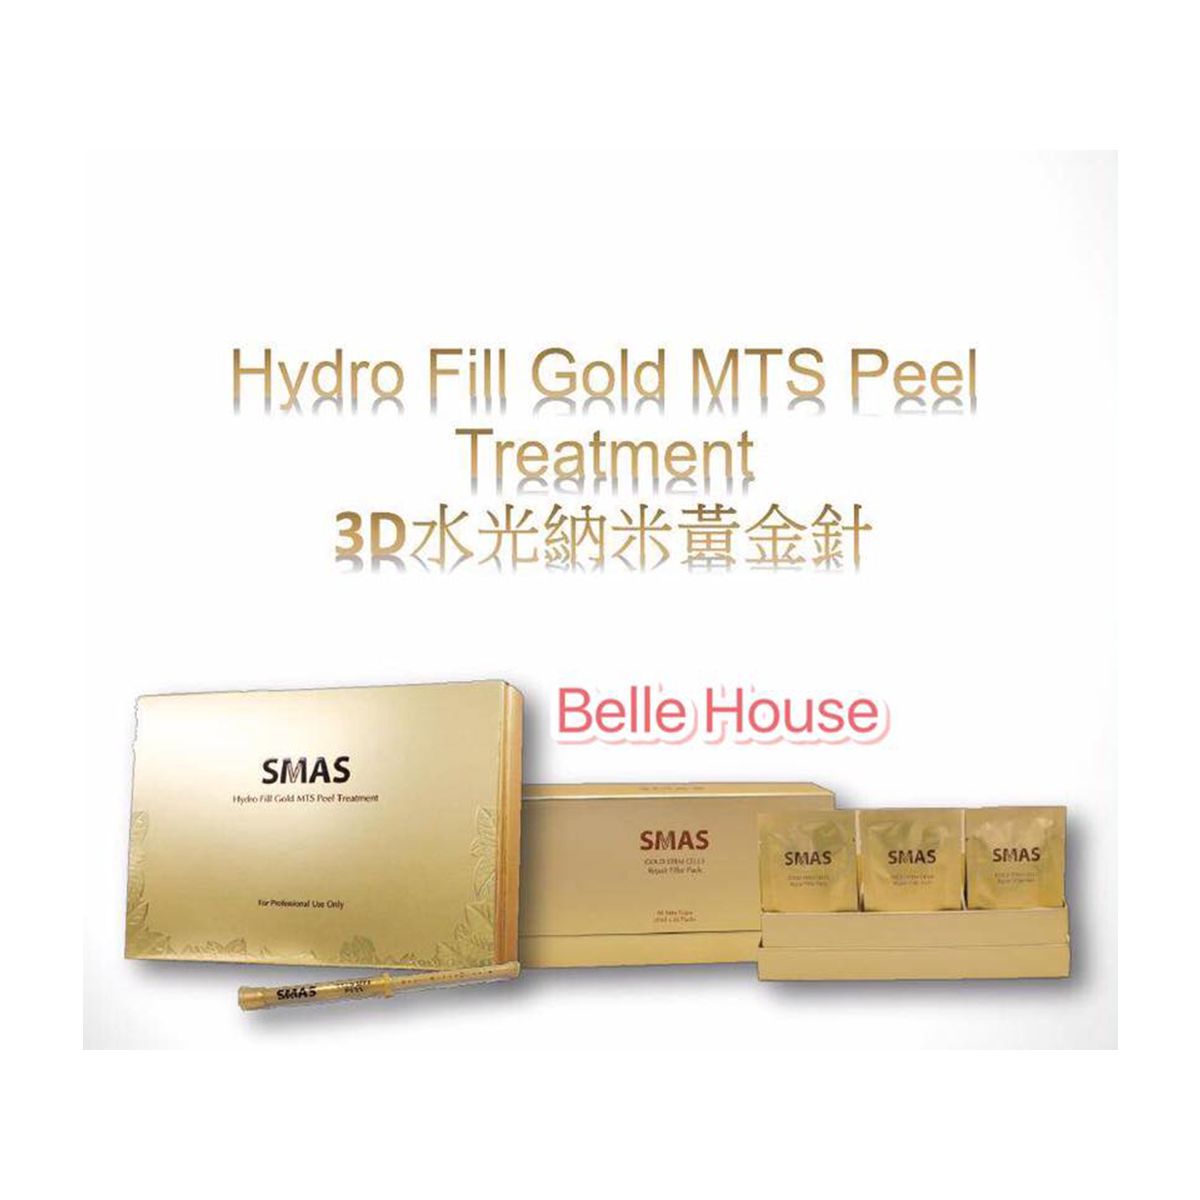 Belle House之美容作品: 3D白金黃金針